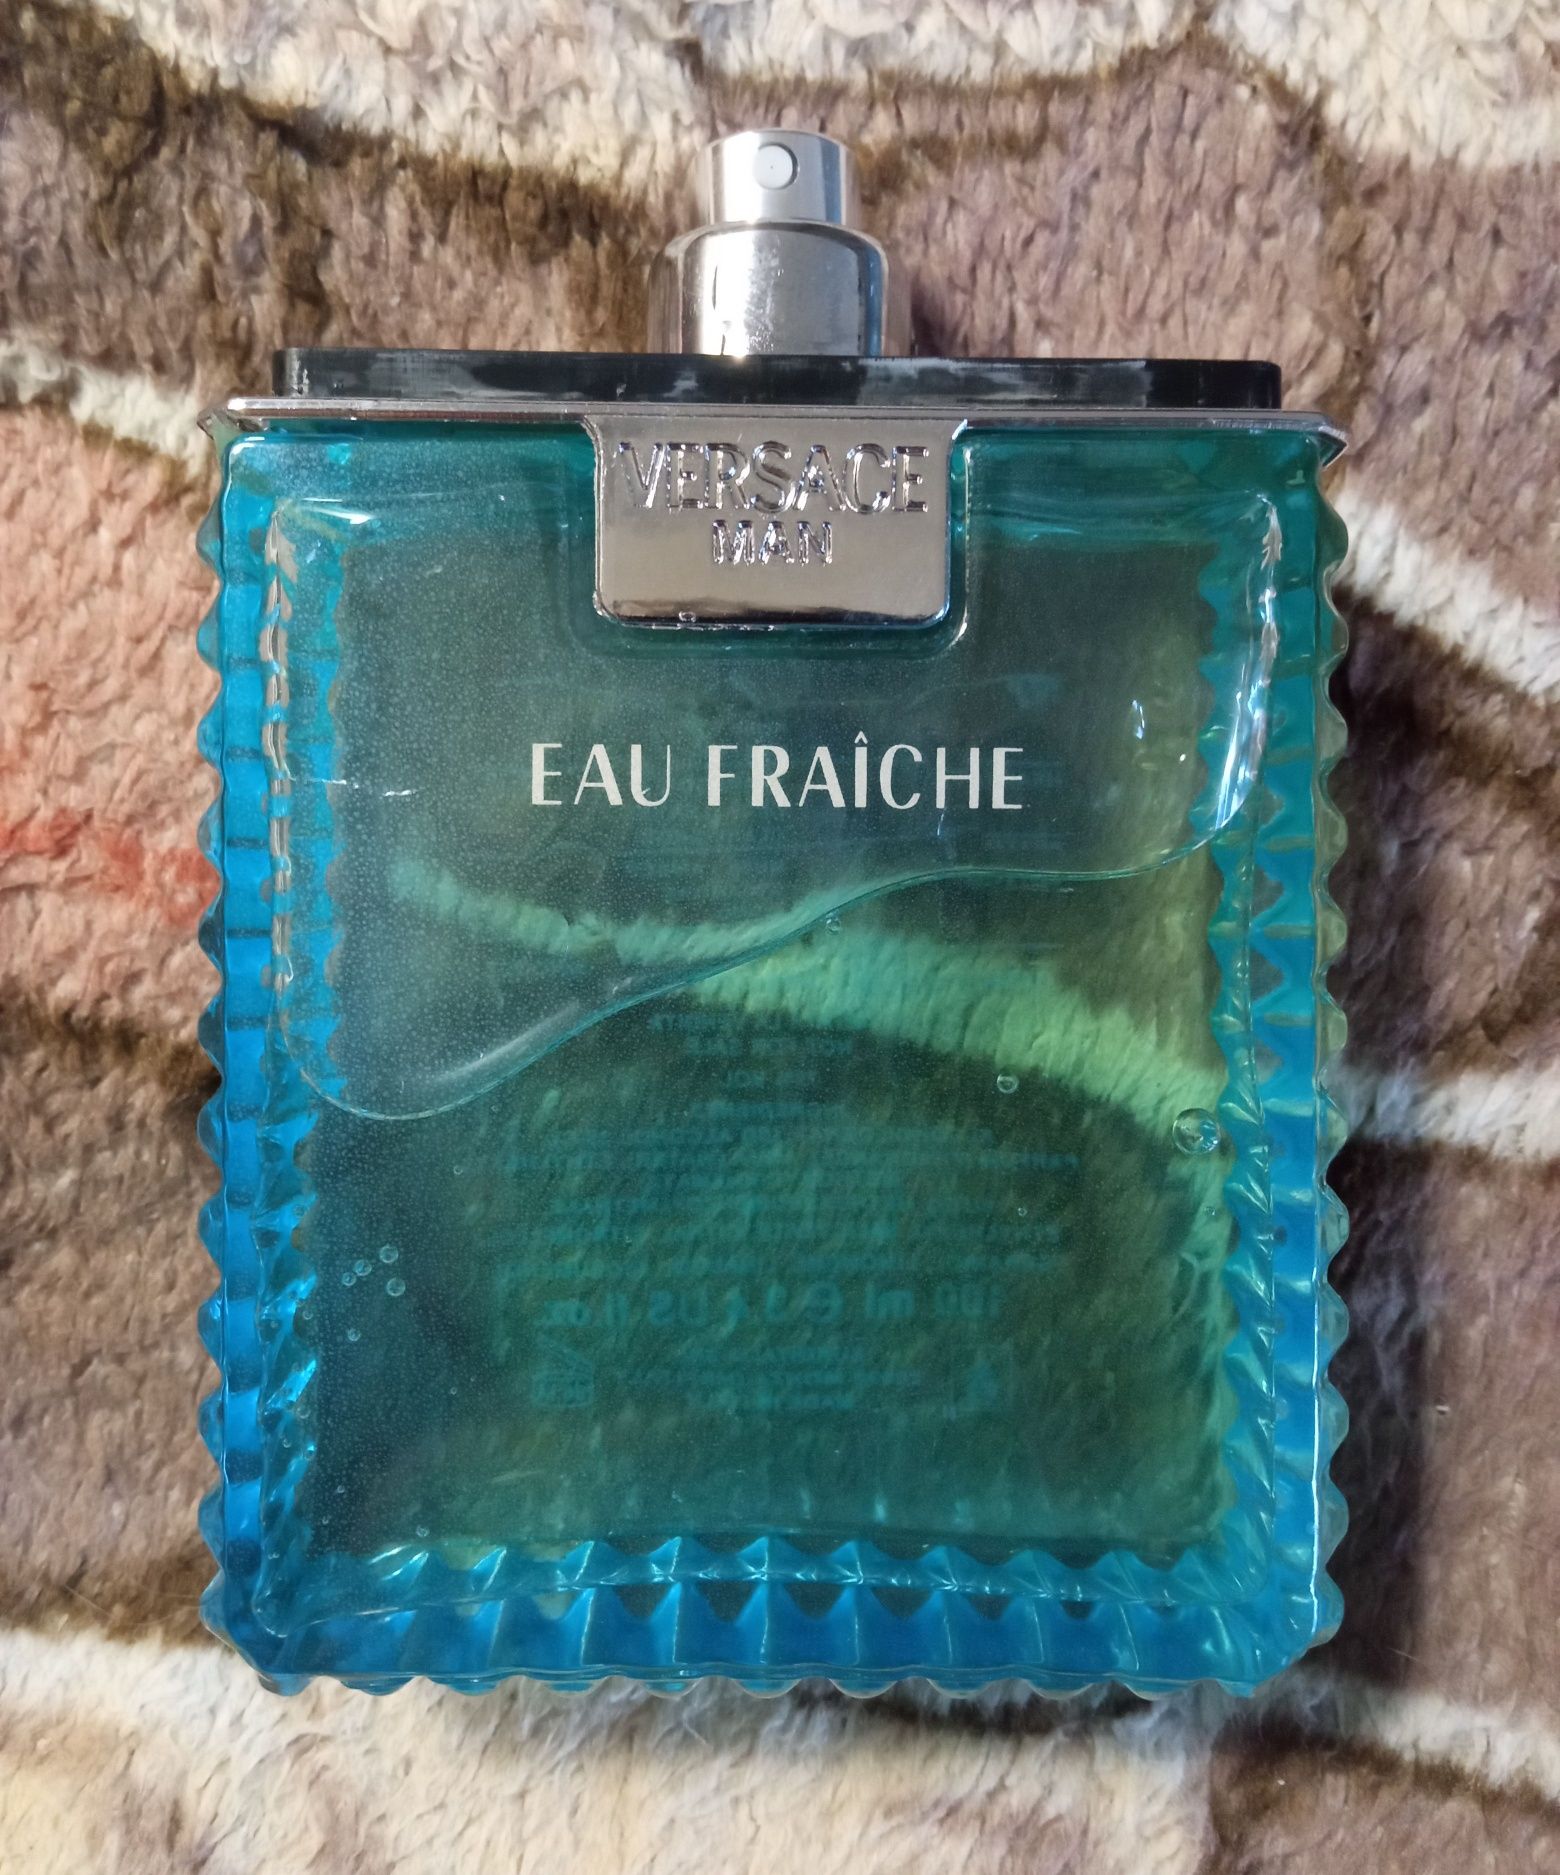 Духи парфюмы Versace man eua Fraiche 100ml оригинал, мужские